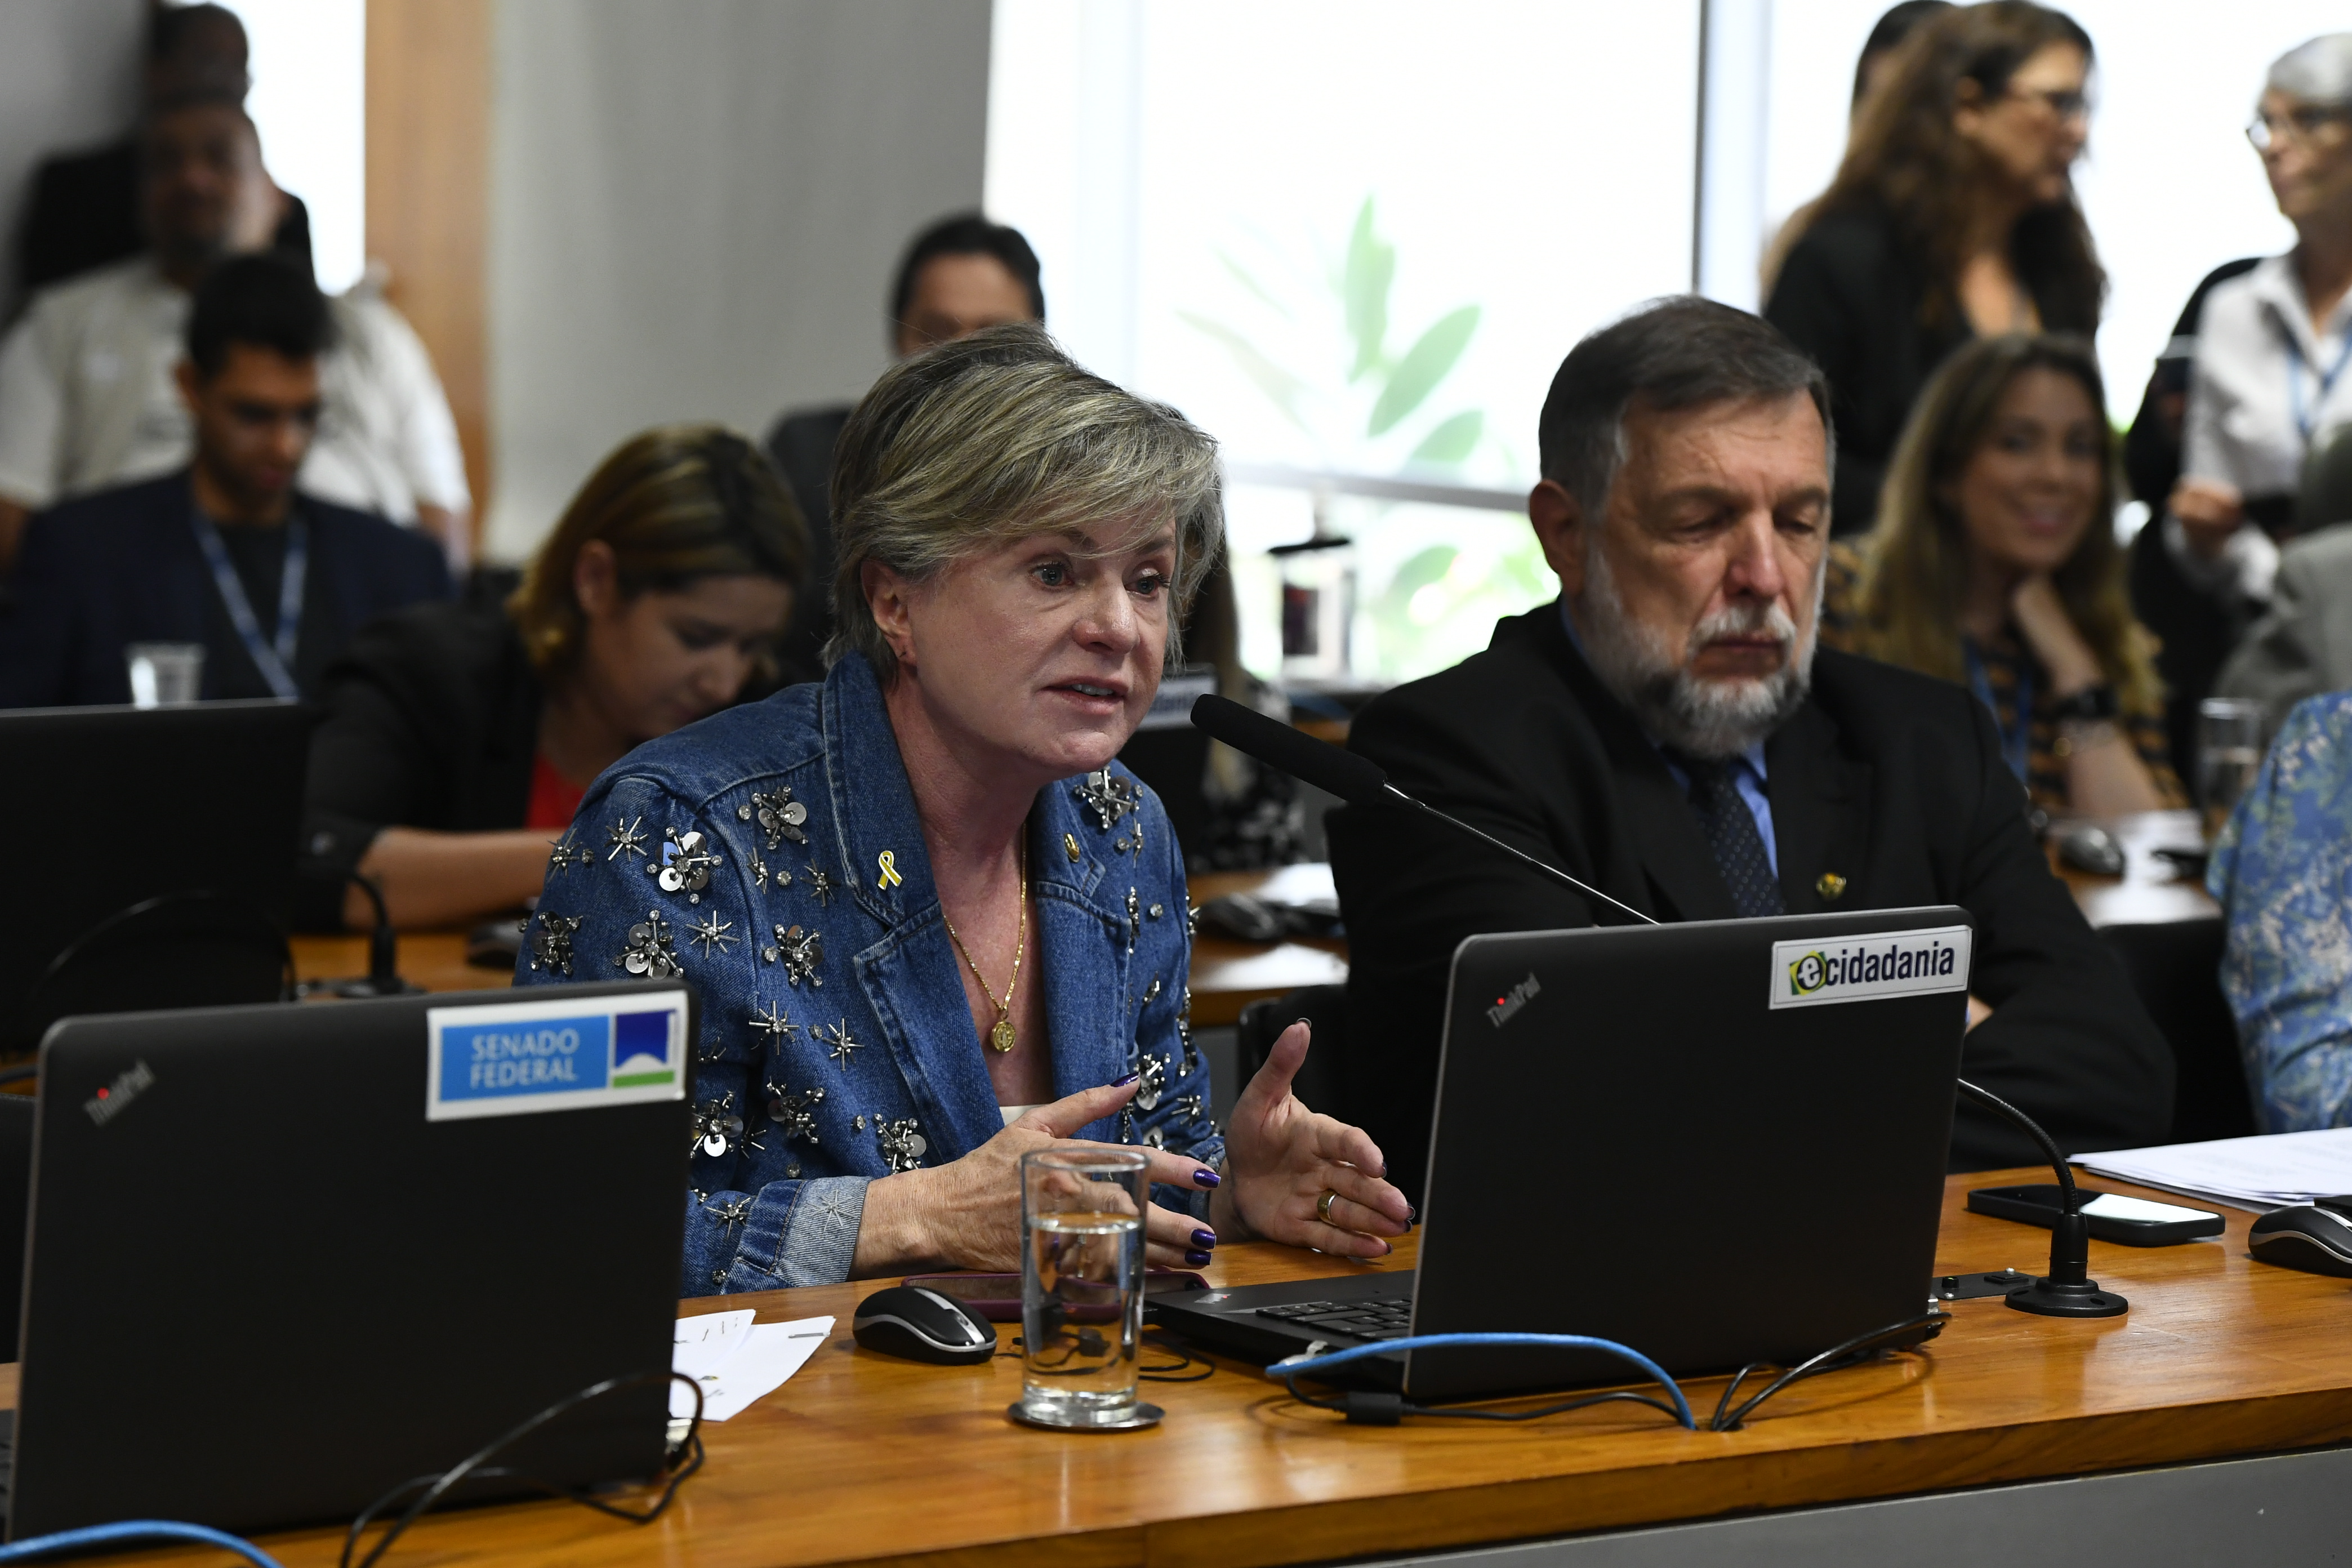 Bancada: 
senadora Margareth Buzetti (PSD-MT) - em pronunciamento; 
senador Flávio Arns (PSB-PR).